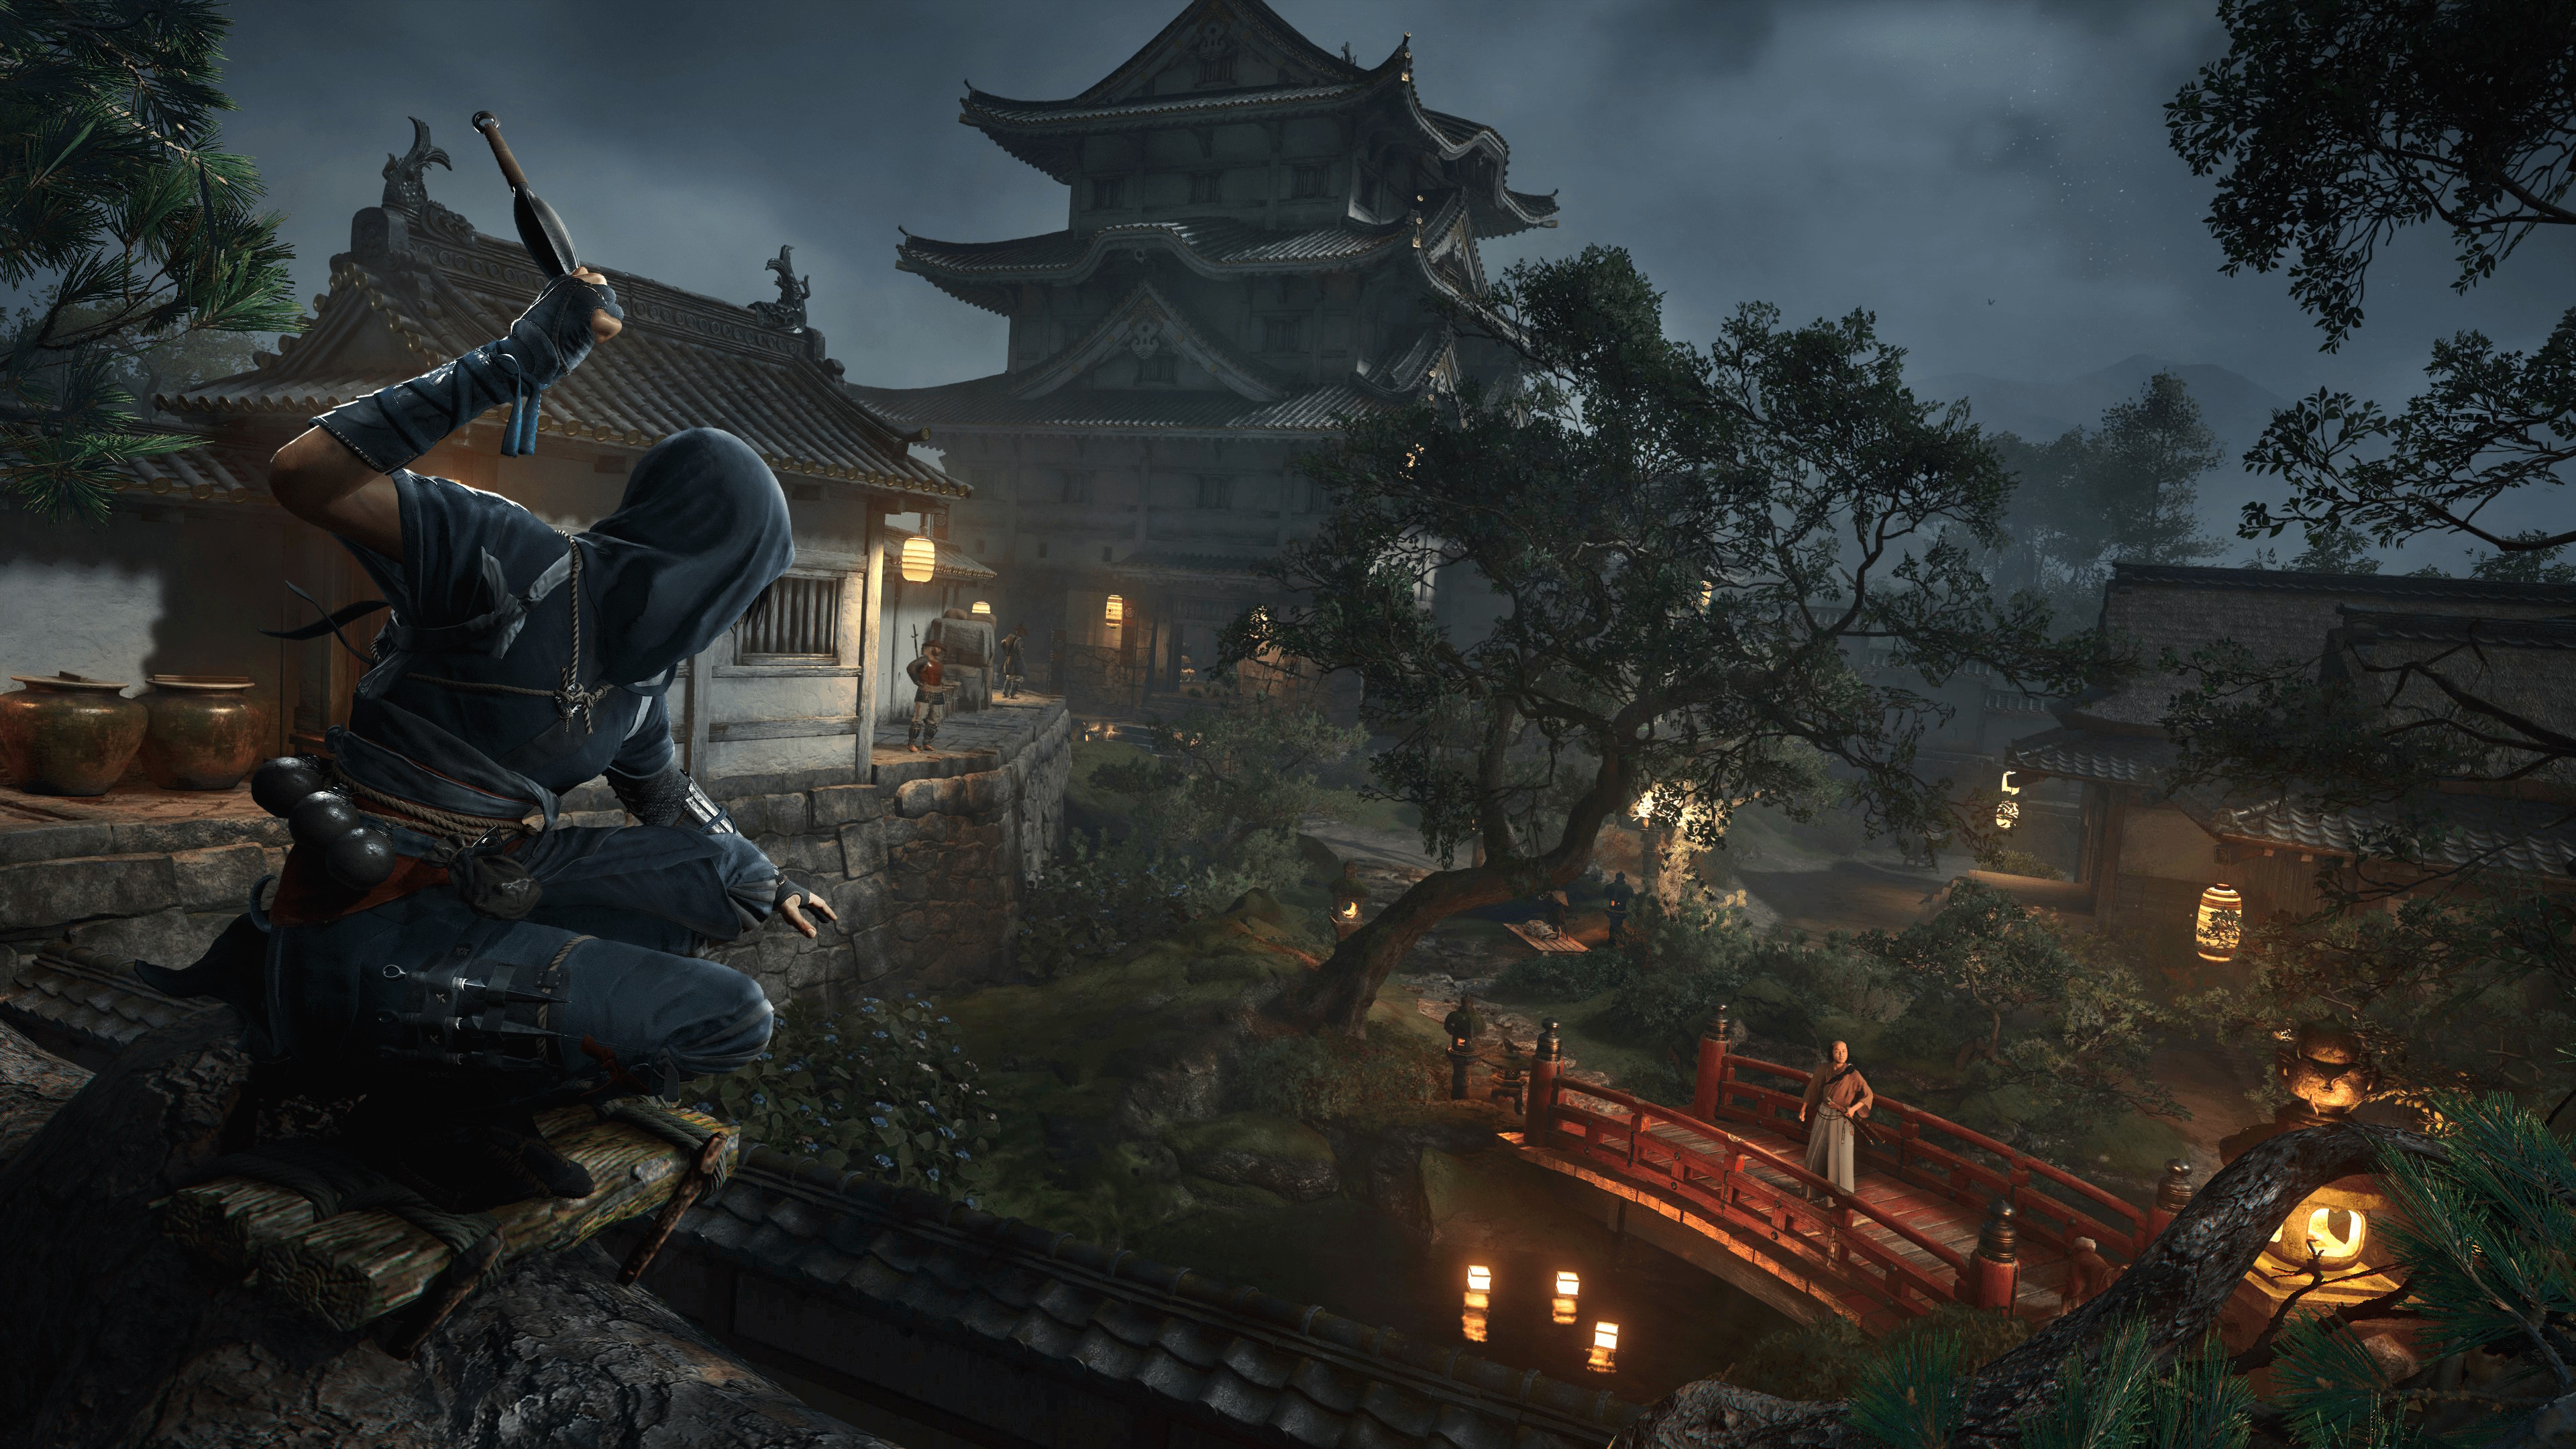 Assassin's Creed Shadows promo image